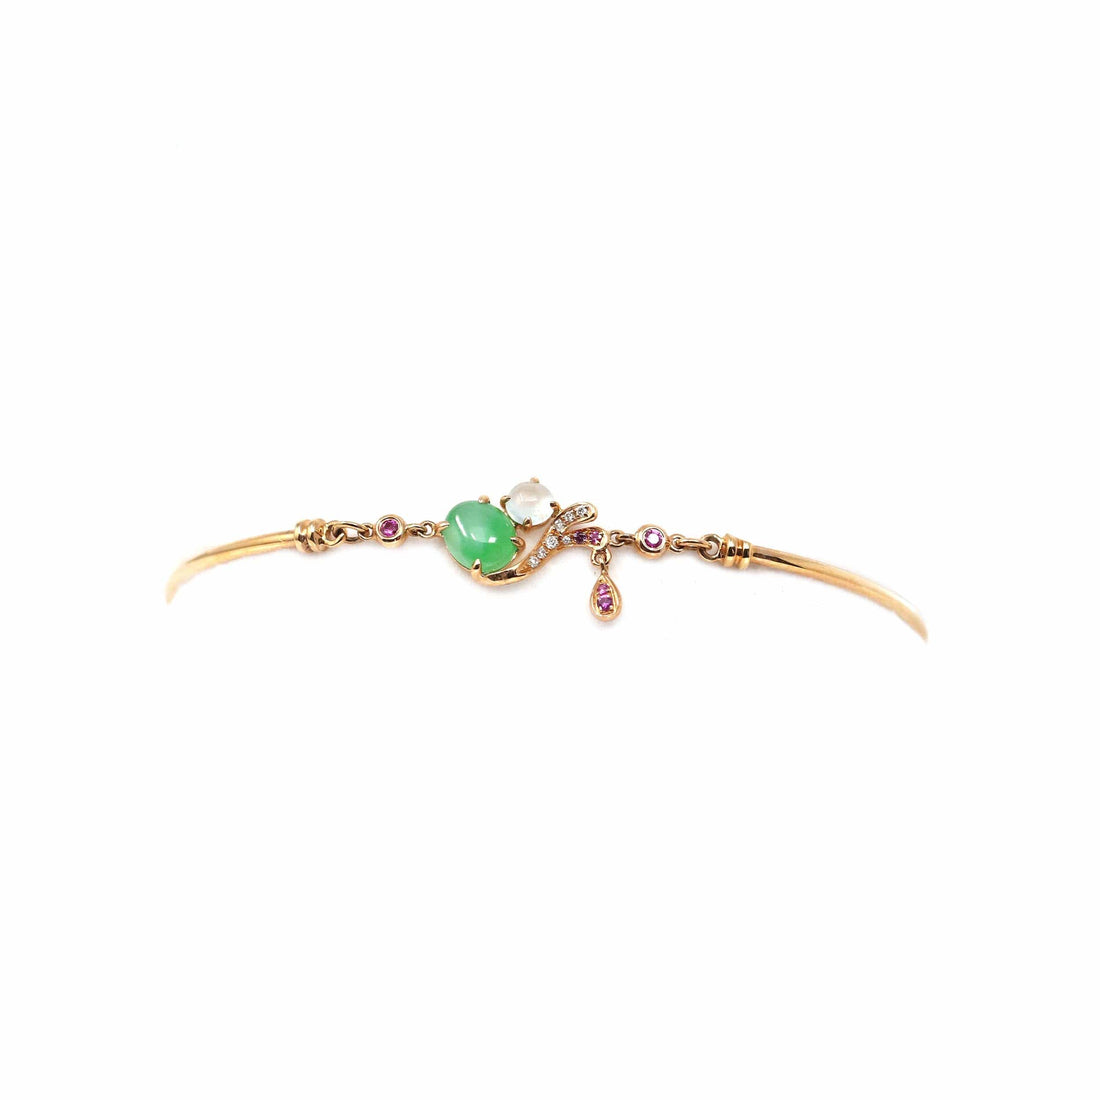 Baikalla Jewelry Gold Jade Bracelet Copy of Copy of 18k Rose Gold "Morning Glory" Half Bracelet Bangle with Green Imperial Jade & Diamonds